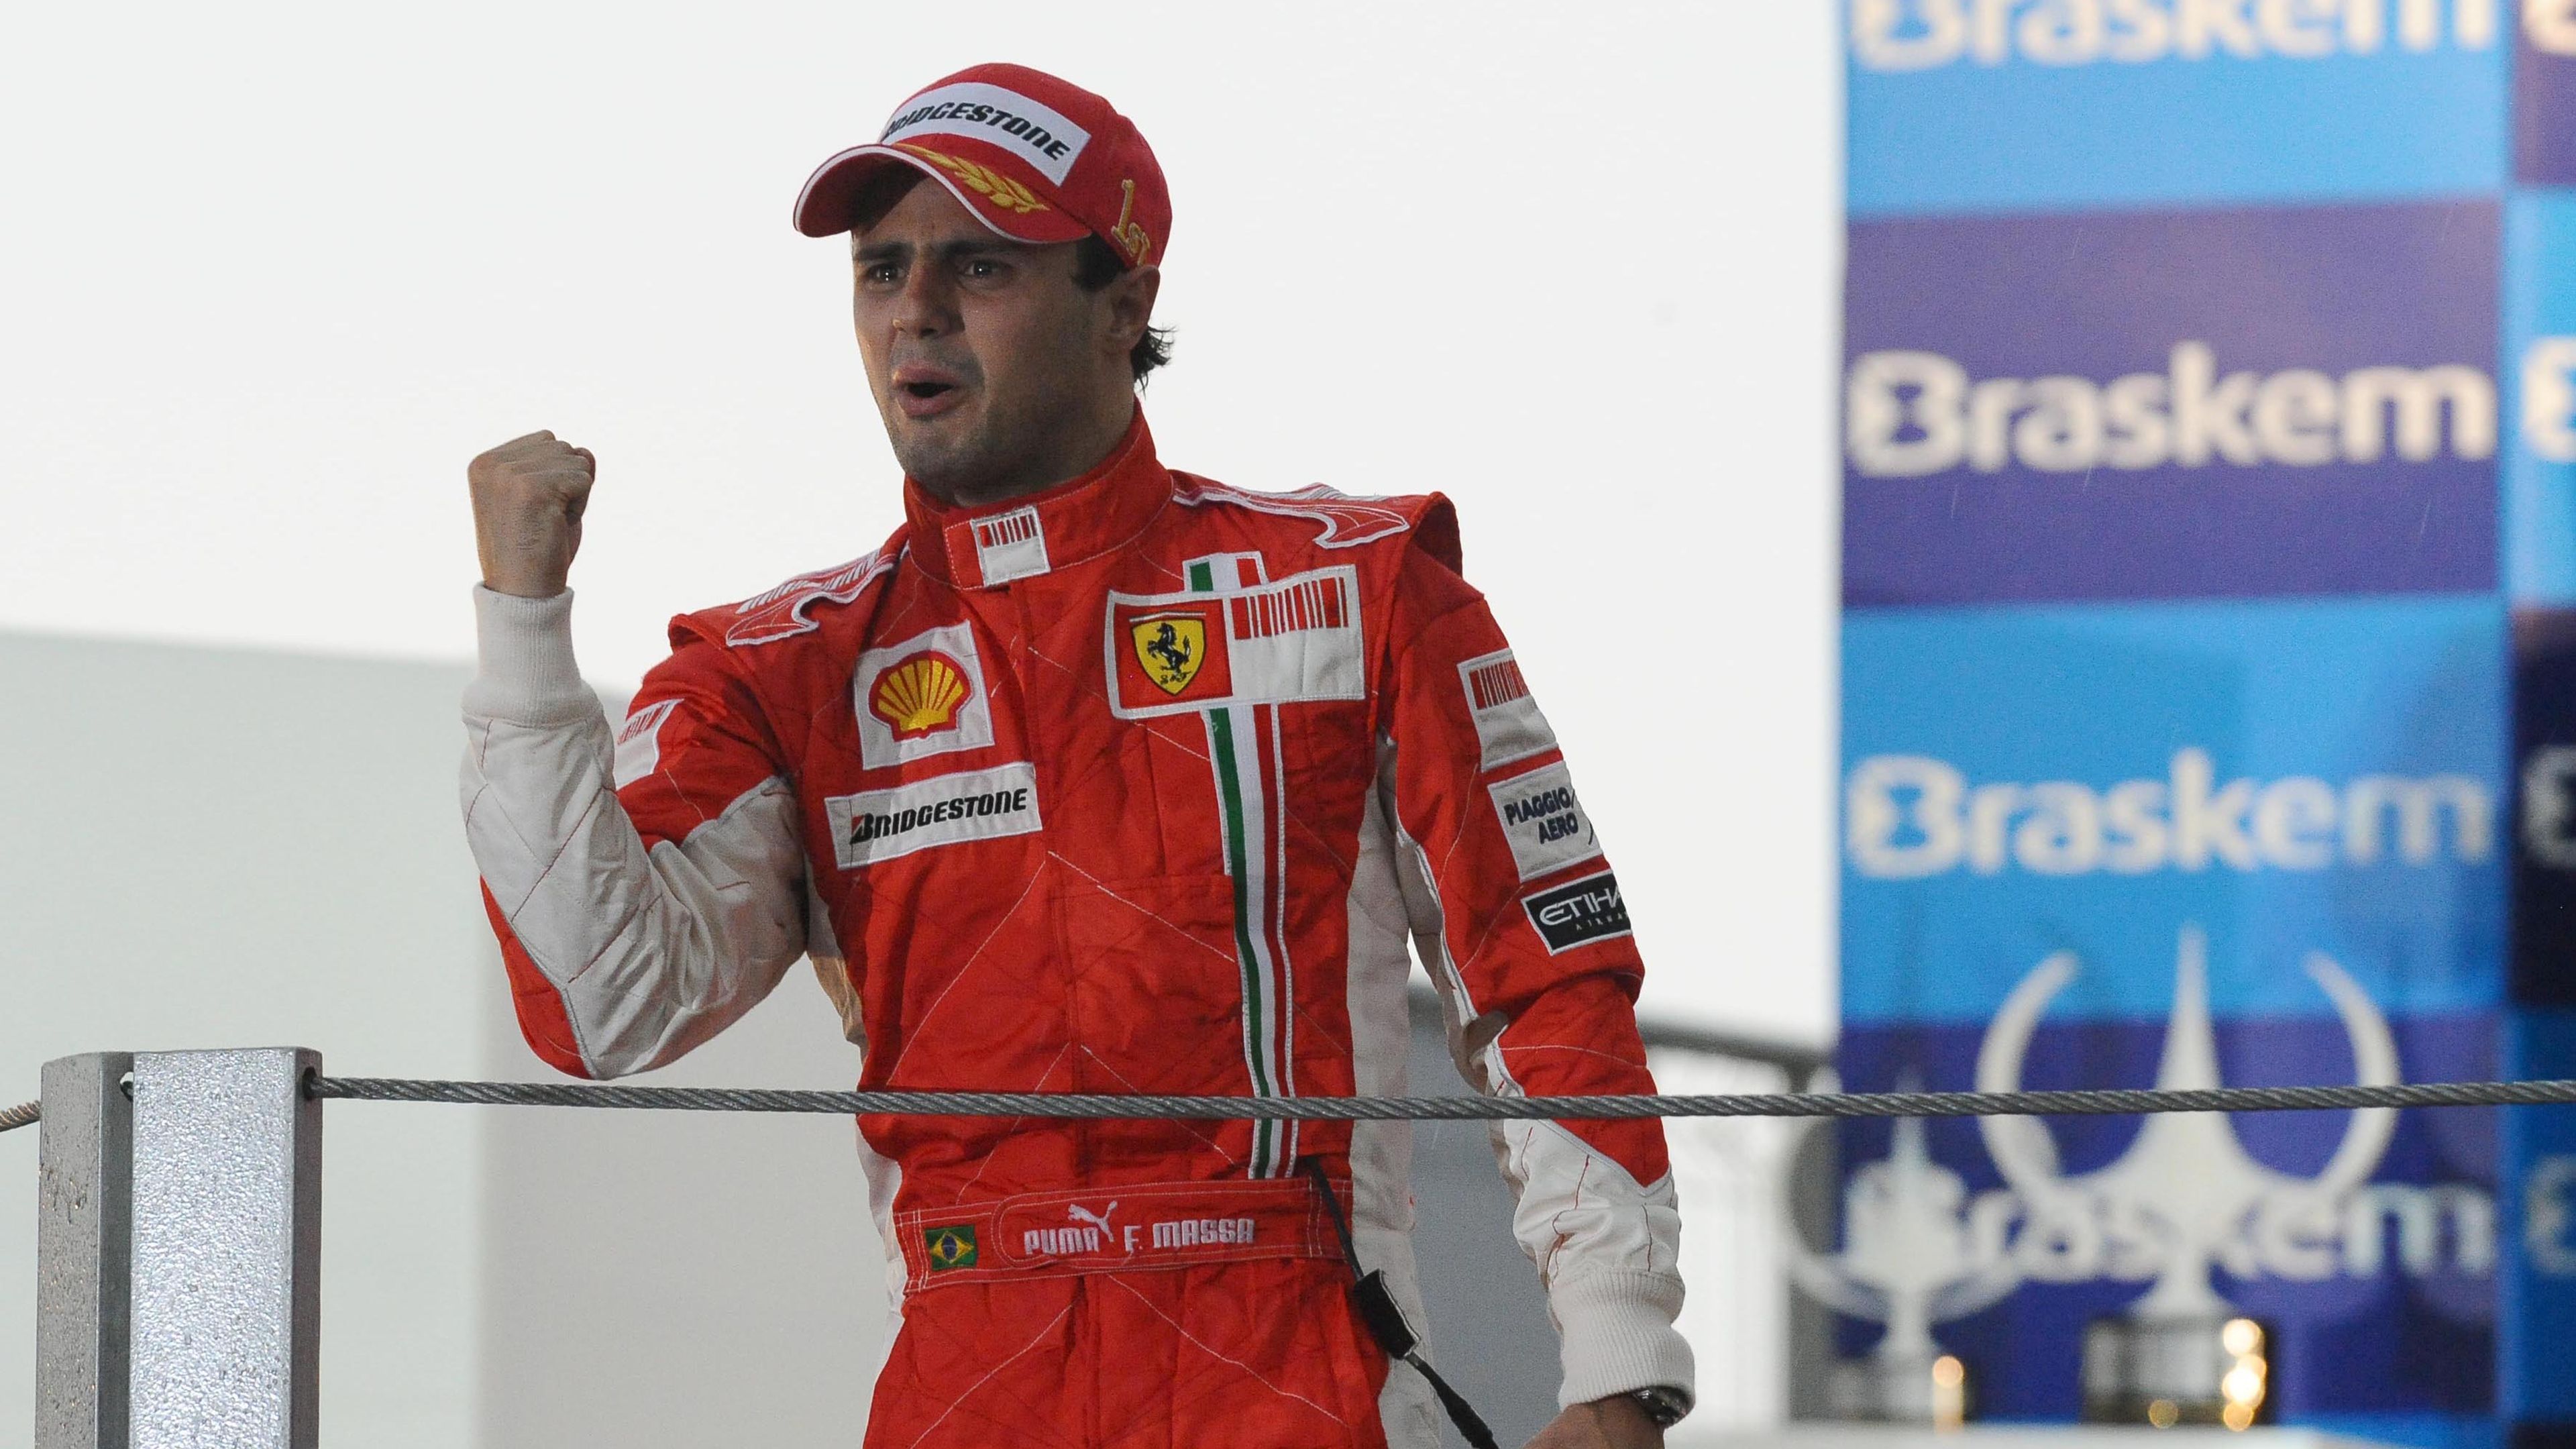 Felipe Massa, piloto de Fórmula 1